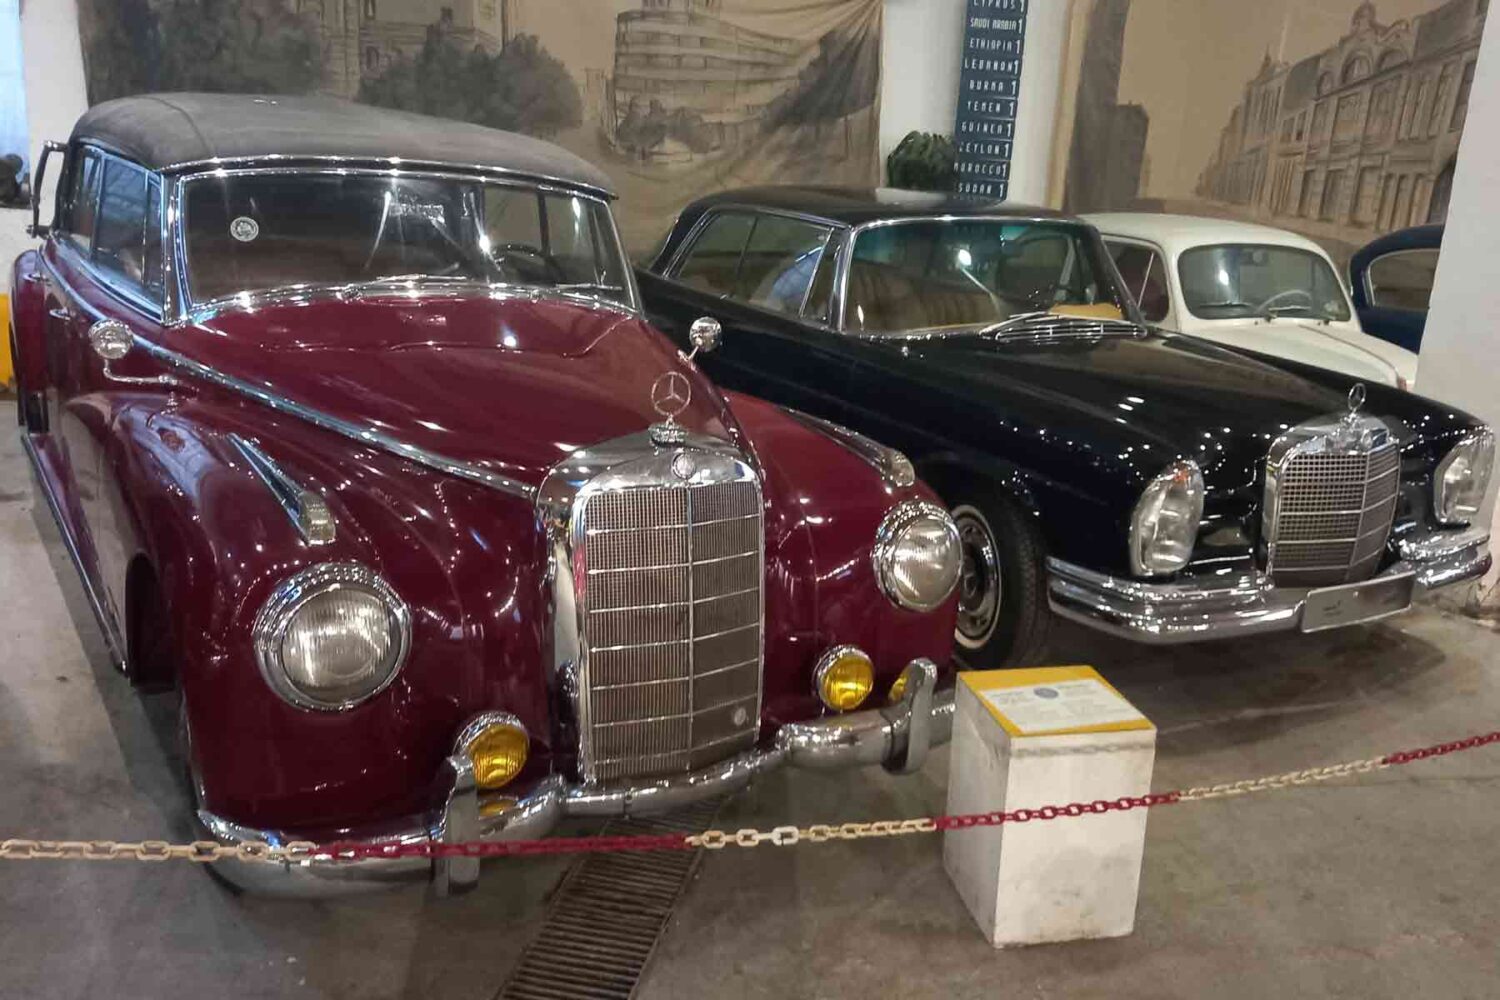 Beogradski muzeji - Muzej automobila